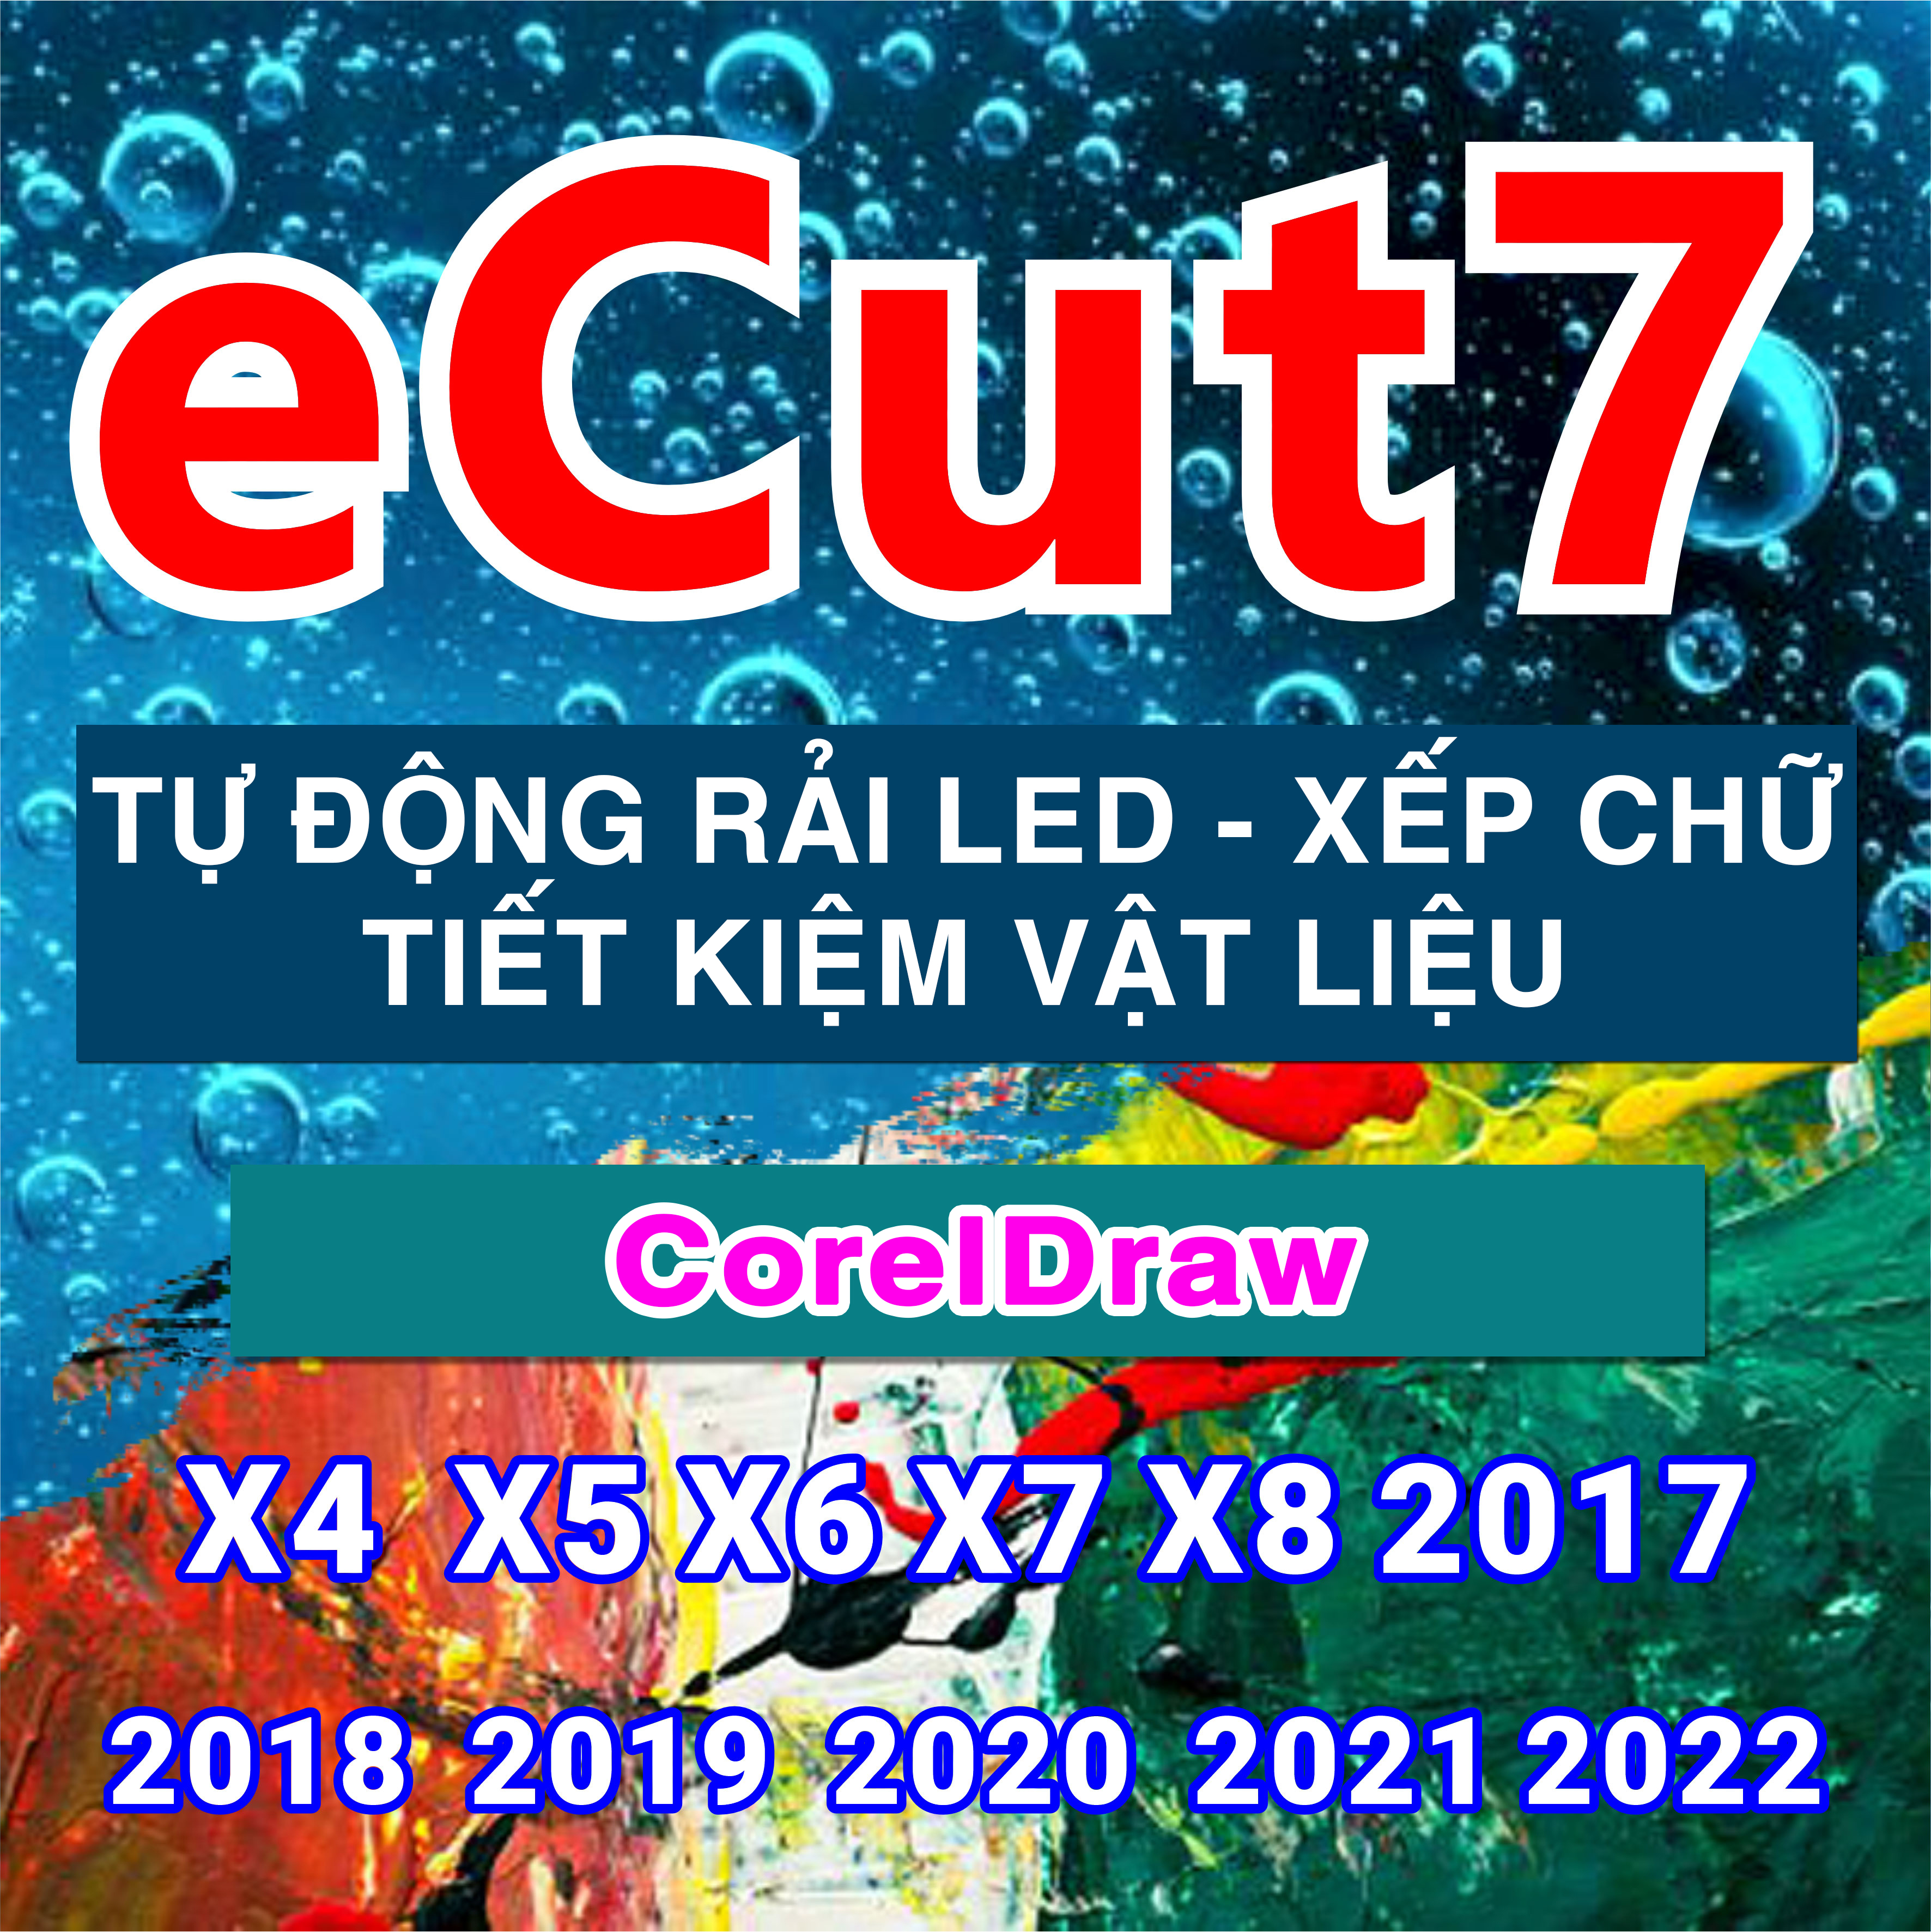 Ecut7